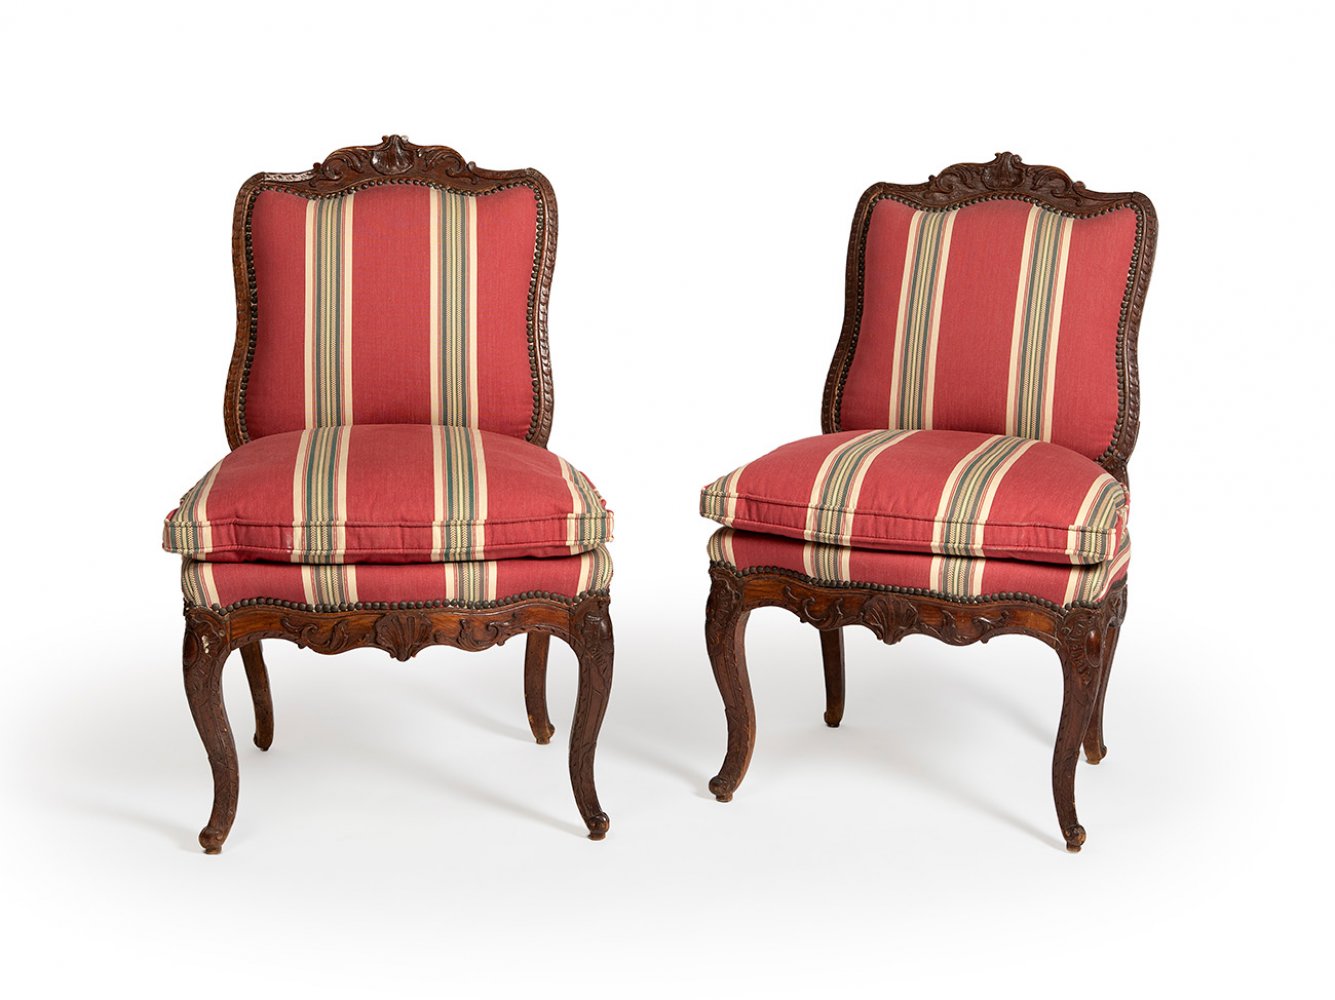 Pair of Louis XV armchairs. France, ca. 1750.Walnut wood.Measurements: 90 x 53 x 64 cm.Pair of Louis